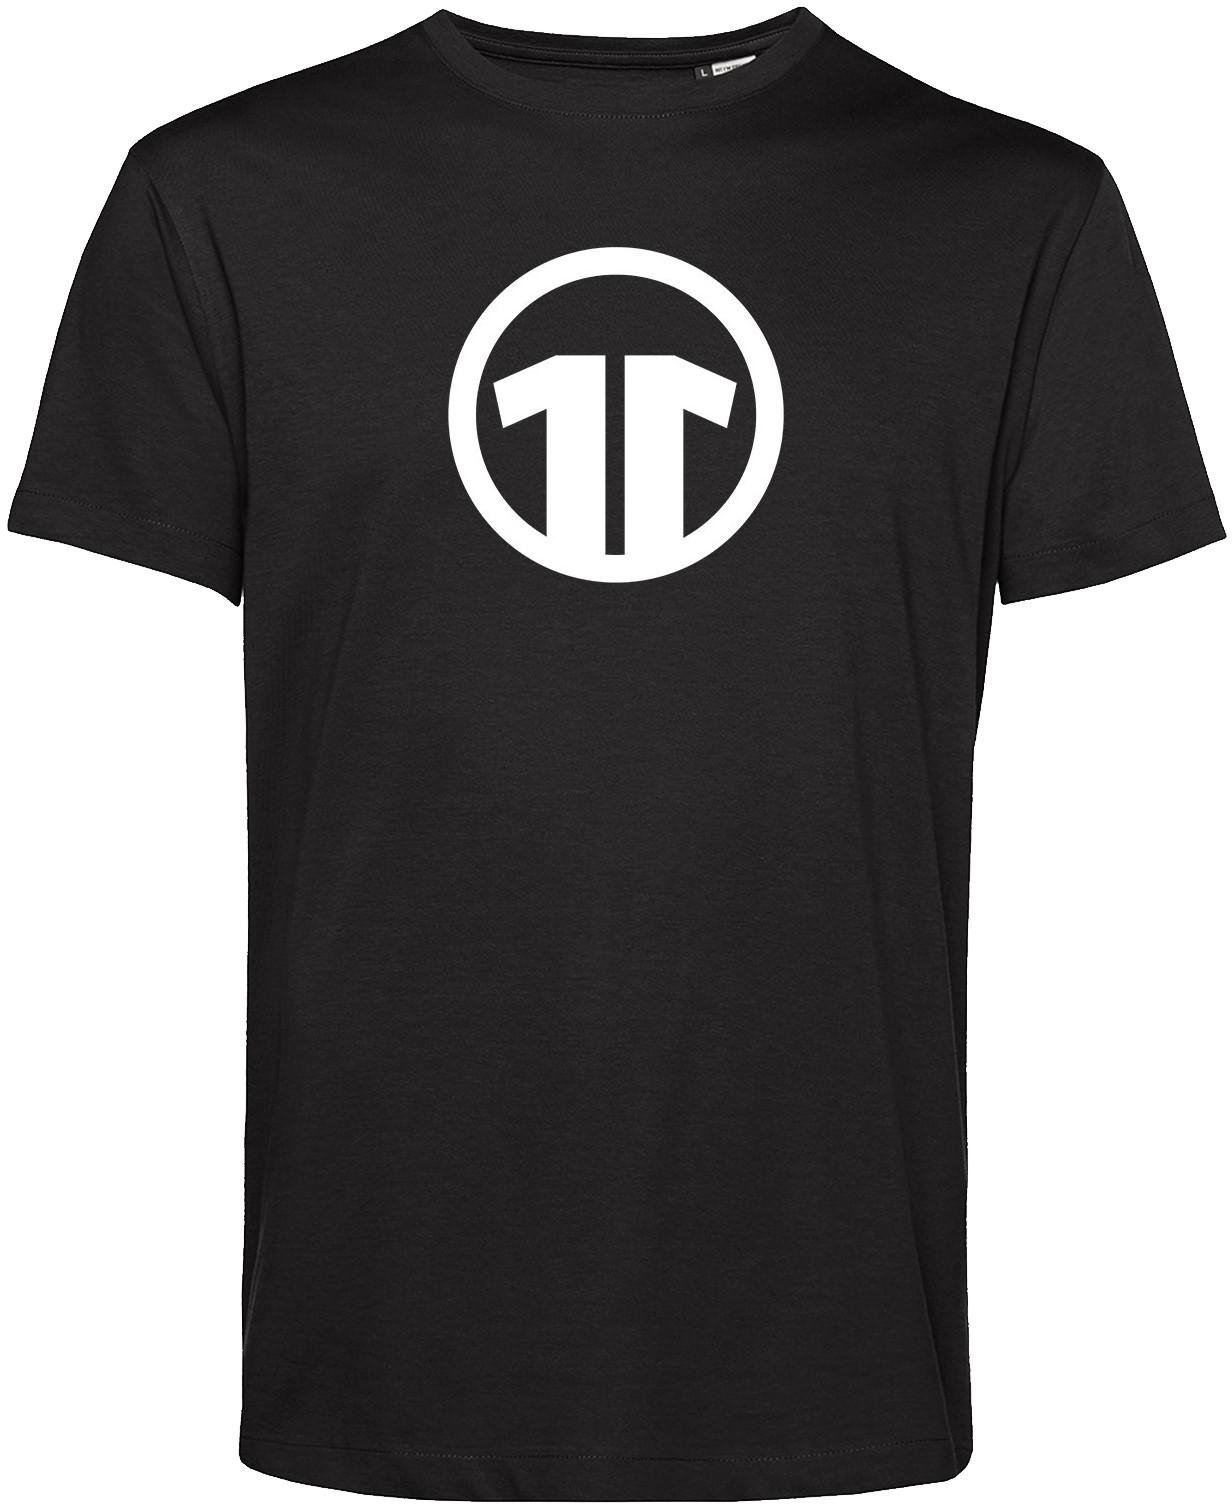 T-shirt 11teamsports 11teamsports Classic T-Shirt Black White